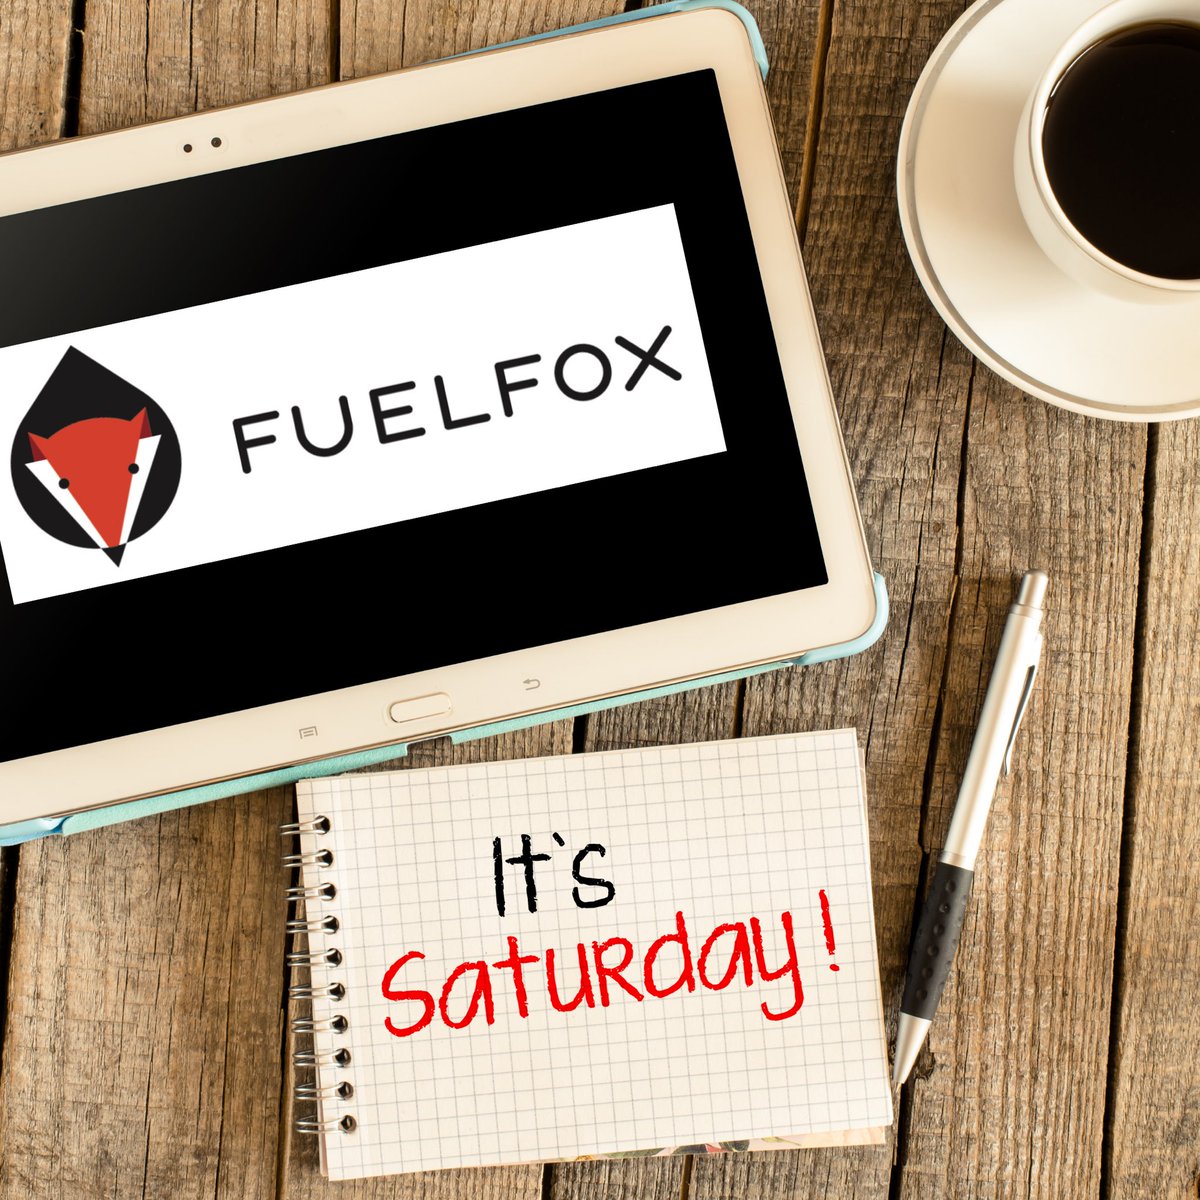 It’s the WEEKEND!!  FuelFox wishes you a Happy Weekend. See you Monday to fuel up! 
.
.
.
.
.
.
#fuelfox #fuelup #enjoytheweekend #whatareyourplans? #gasuponMonday